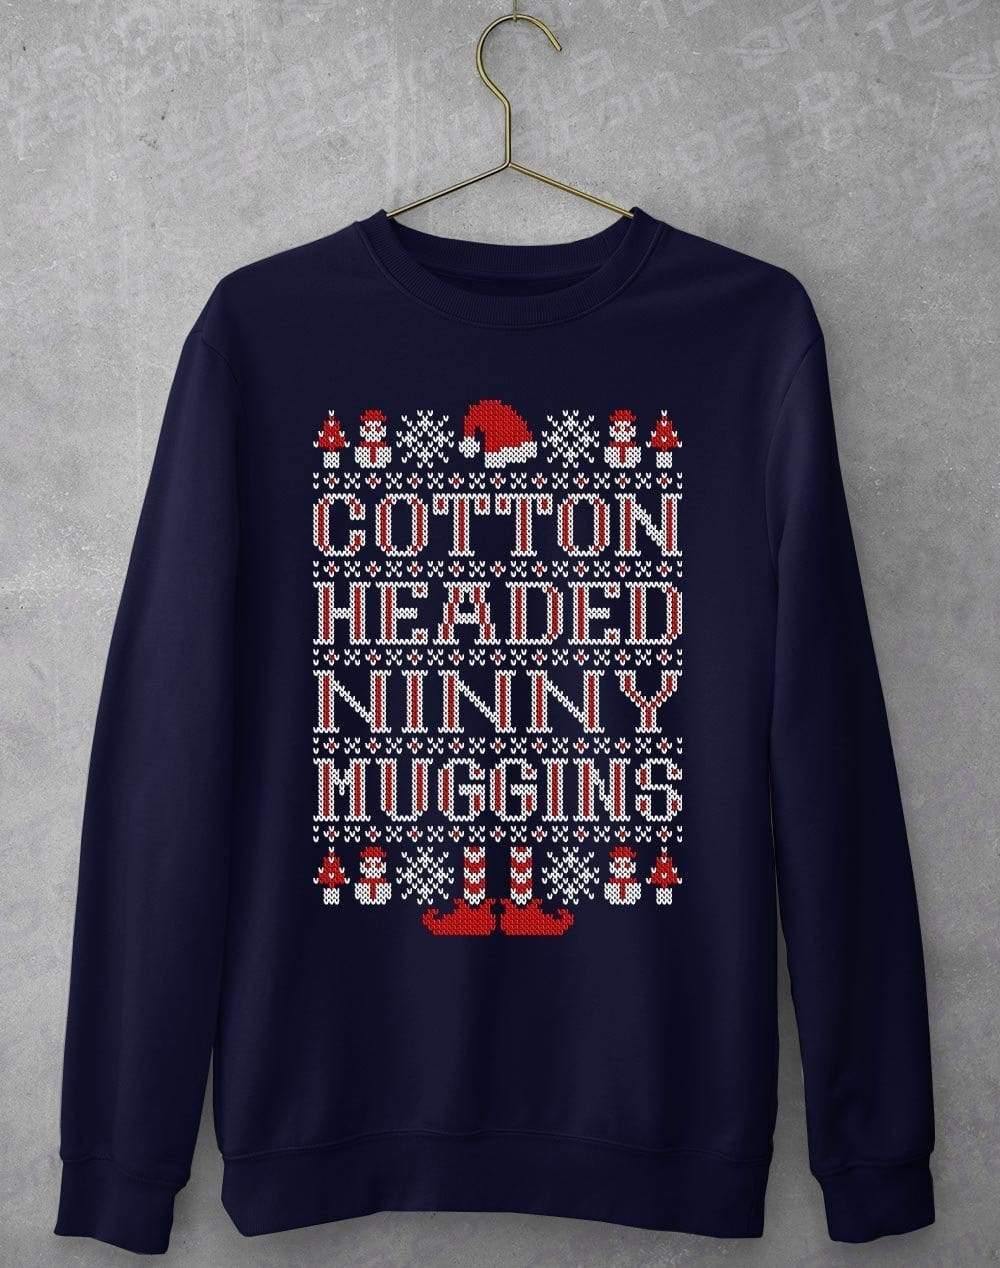 Cotton Headed Ninny Muggins Festive Knitted-Look Sweatshirt S / Oxford Navy  - Off World Tees